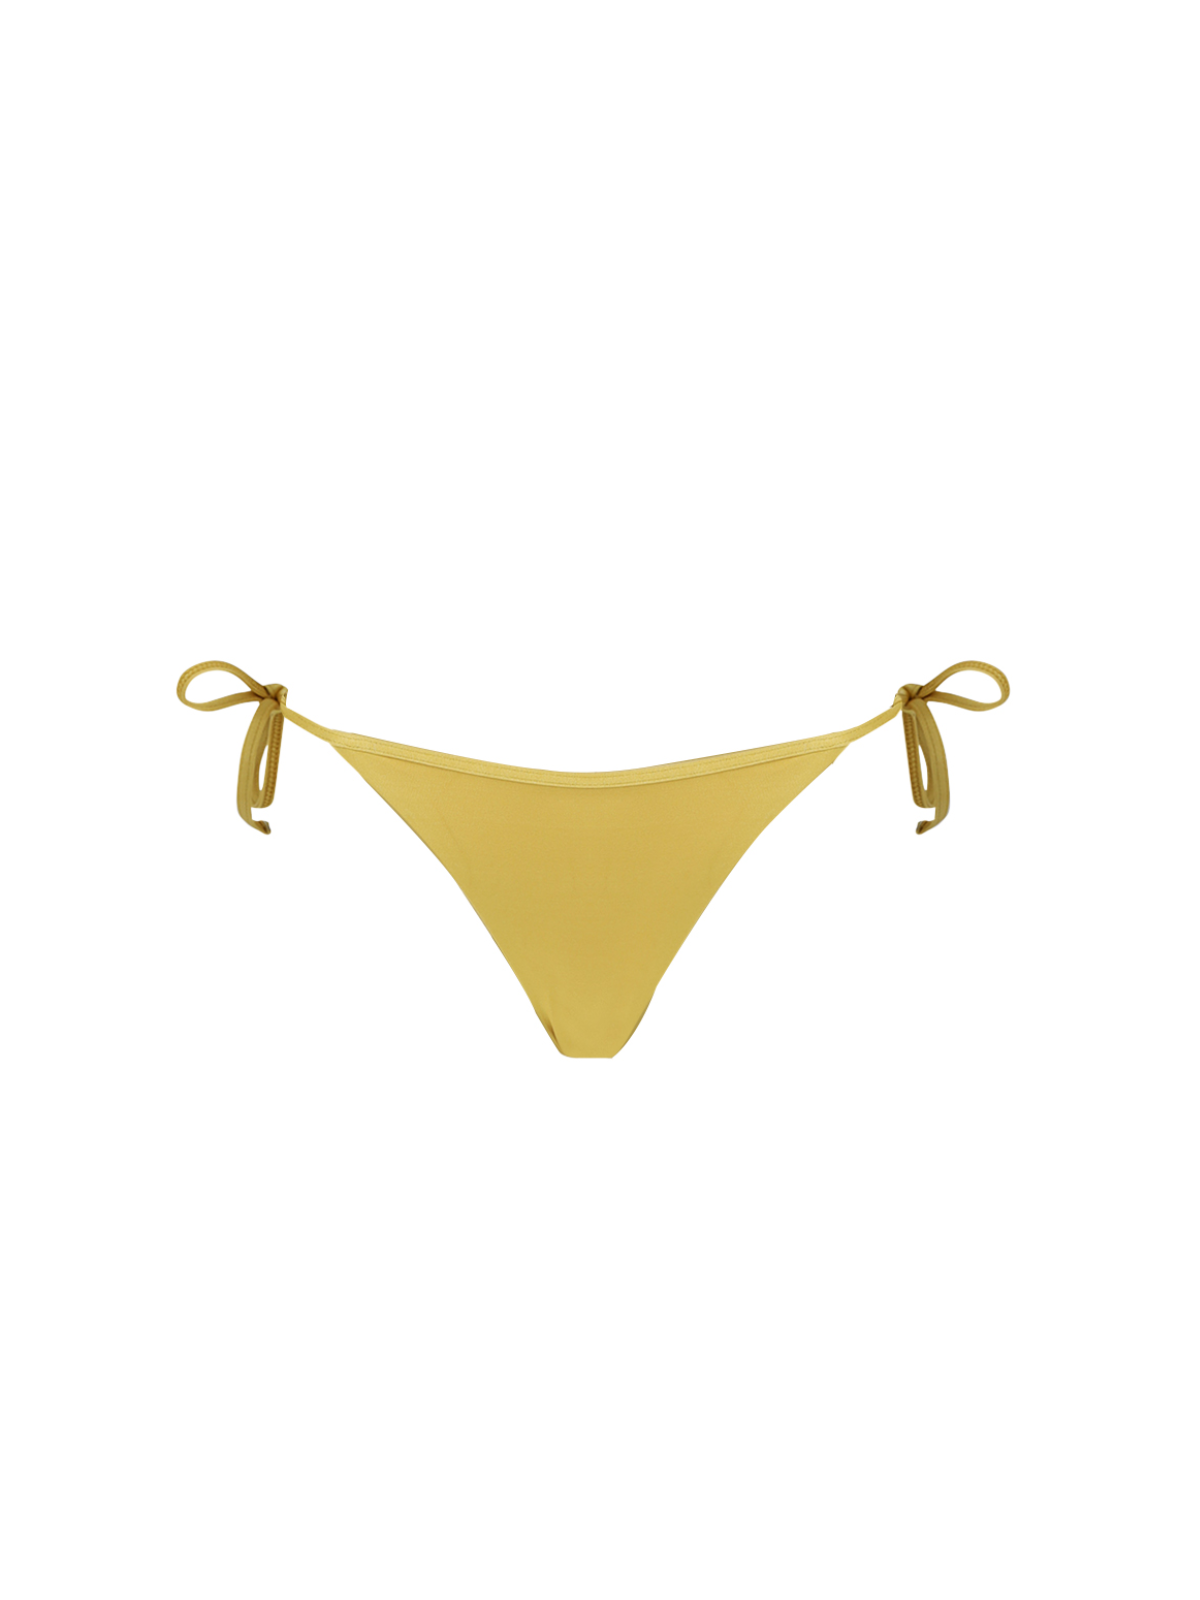 Gabriela String Bikini Bottoms - Metallic Gold